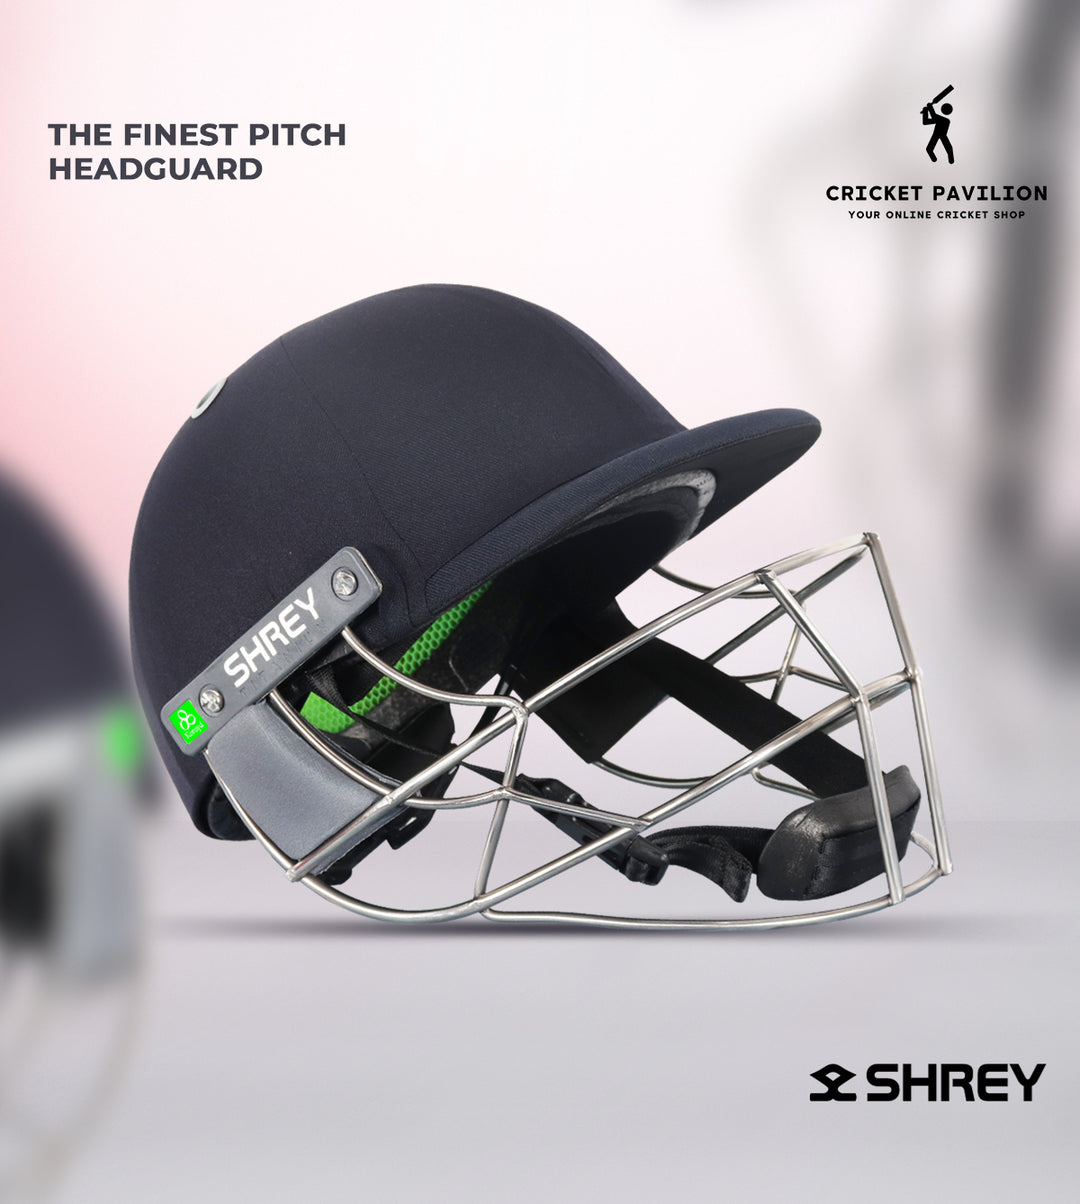 Shrey Cricket Helmet, the best helmet on the market